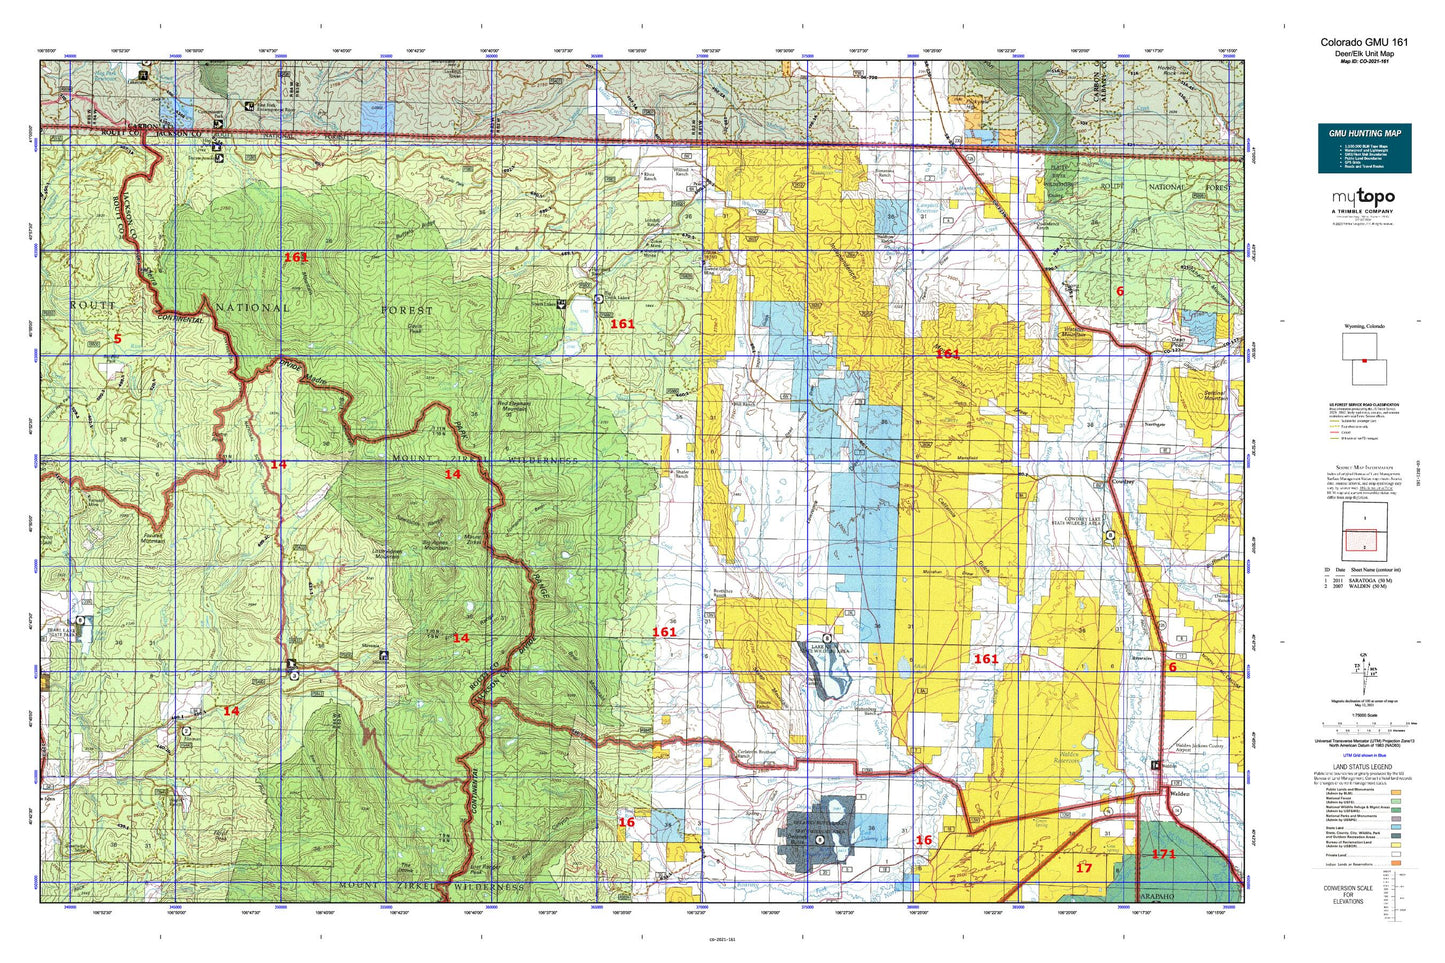 Colorado GMU 161 Map Image